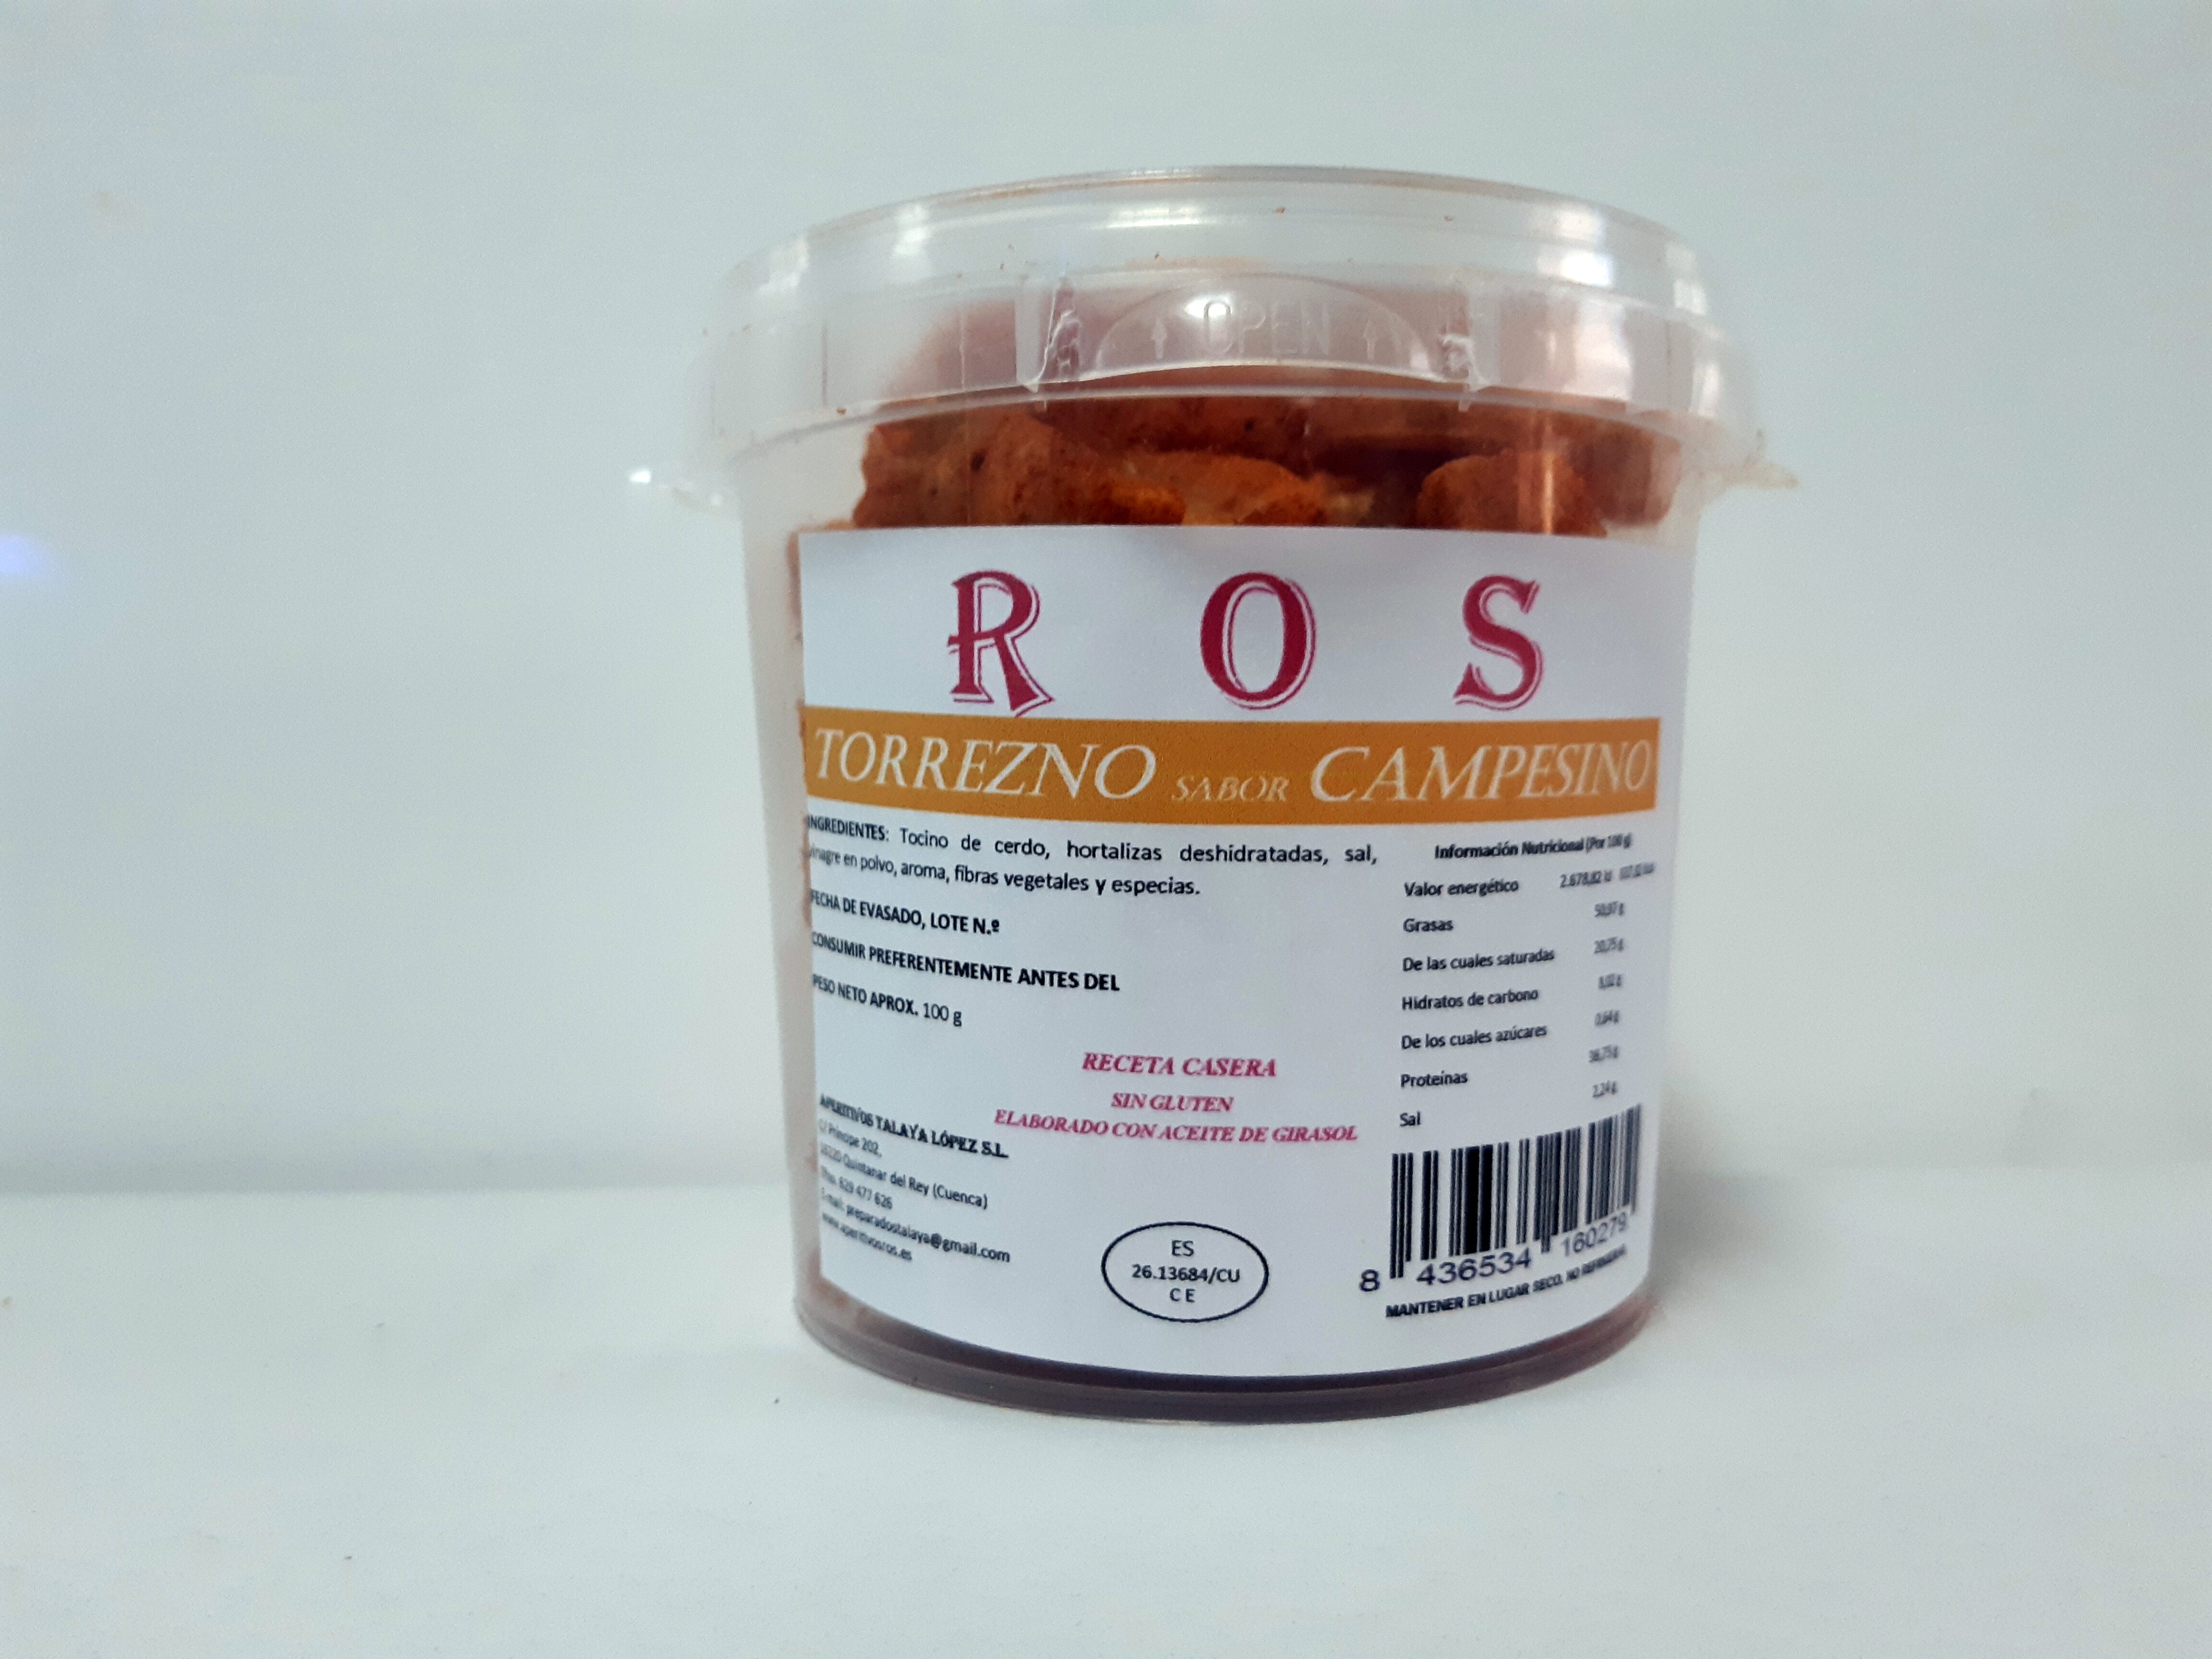 TORREZNO SABOR CAMPESINO ROS - Product - es